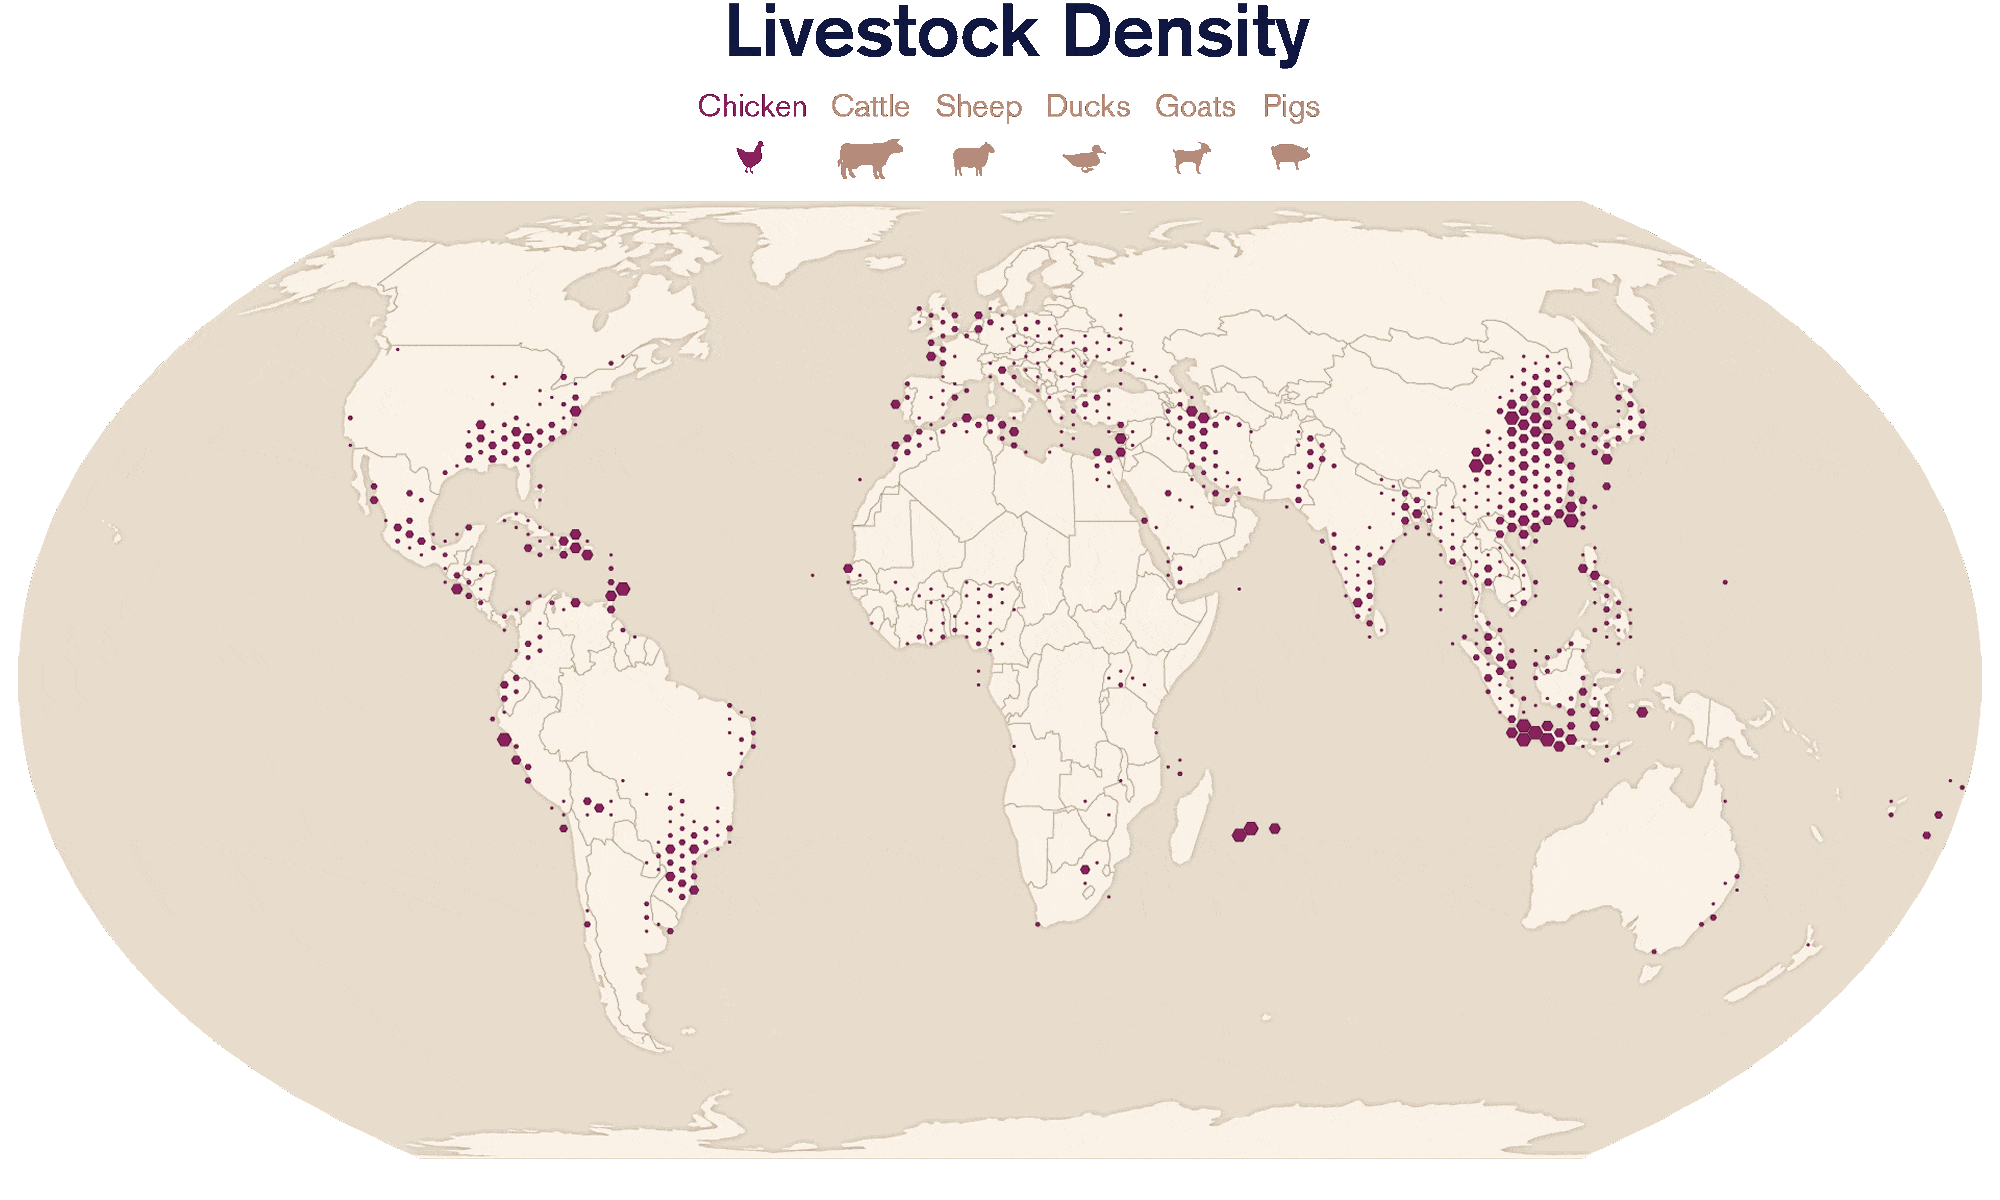 A global livestock density map